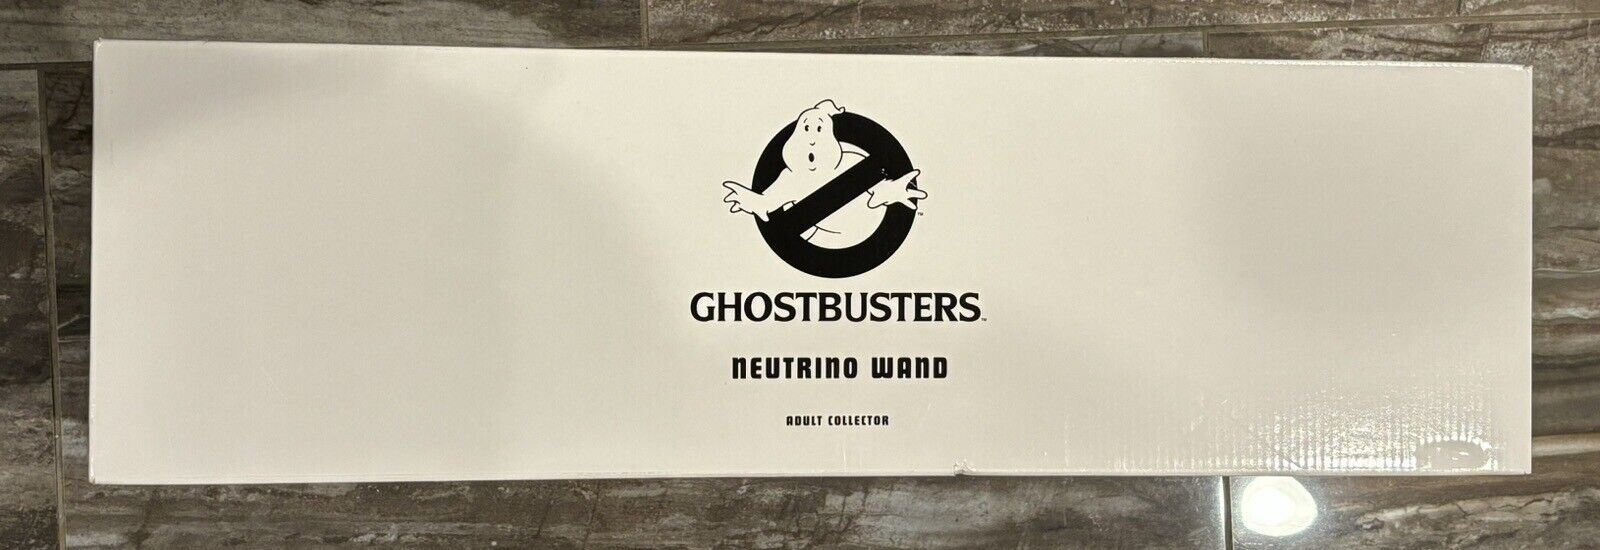 Ghostbusters NEUTRINO WAND Prop Replica MATTY COLLECTOR unused MIB 2013